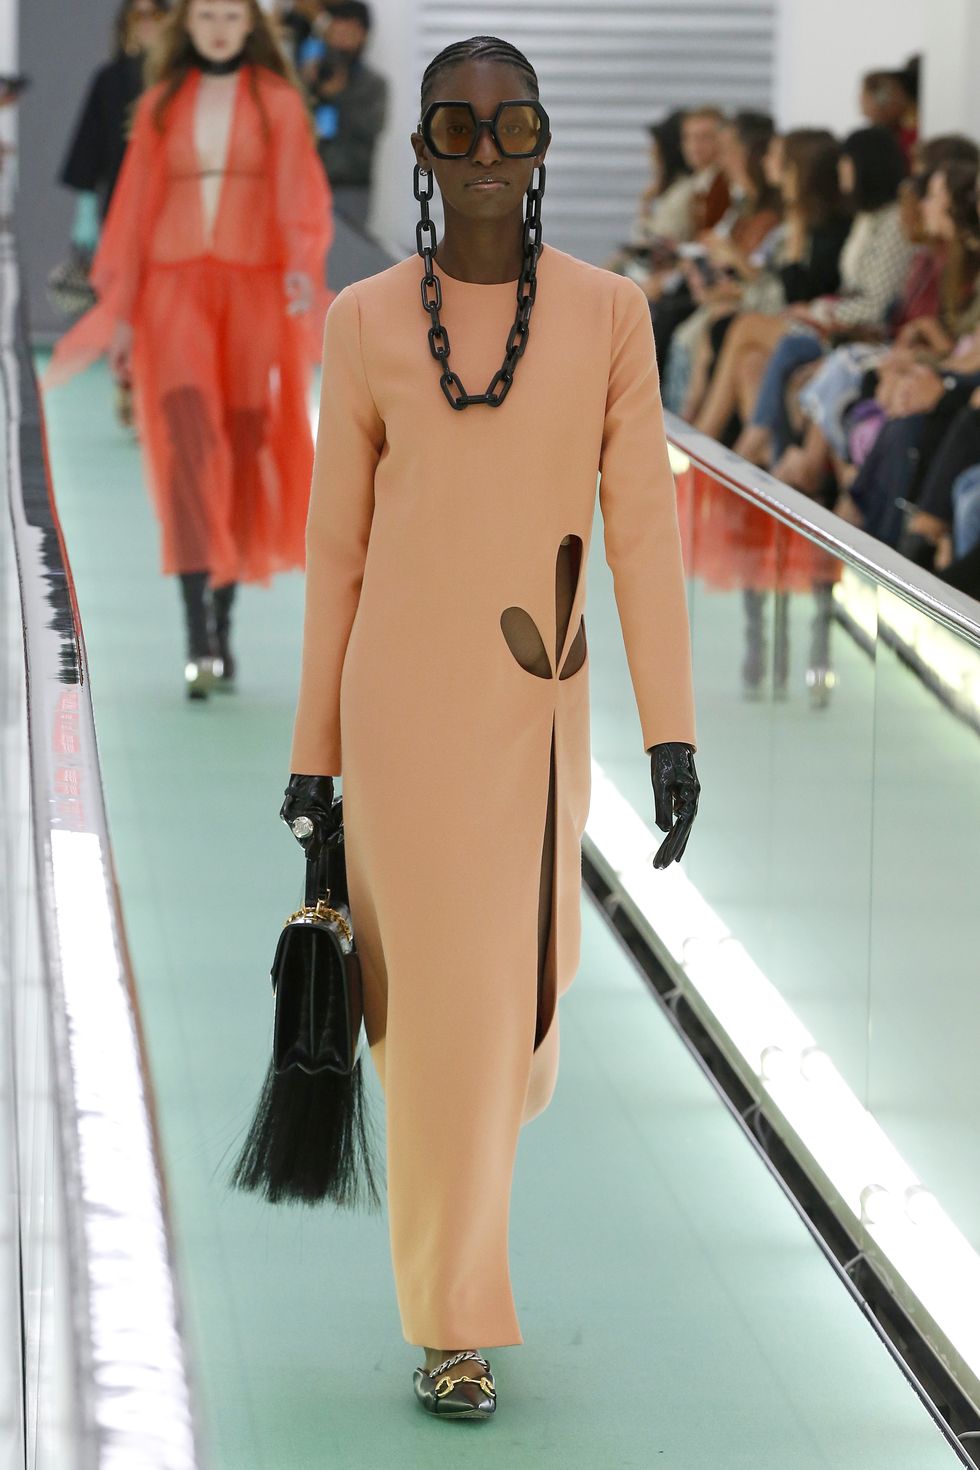 Gucci bares all at Milan fashion week 2020